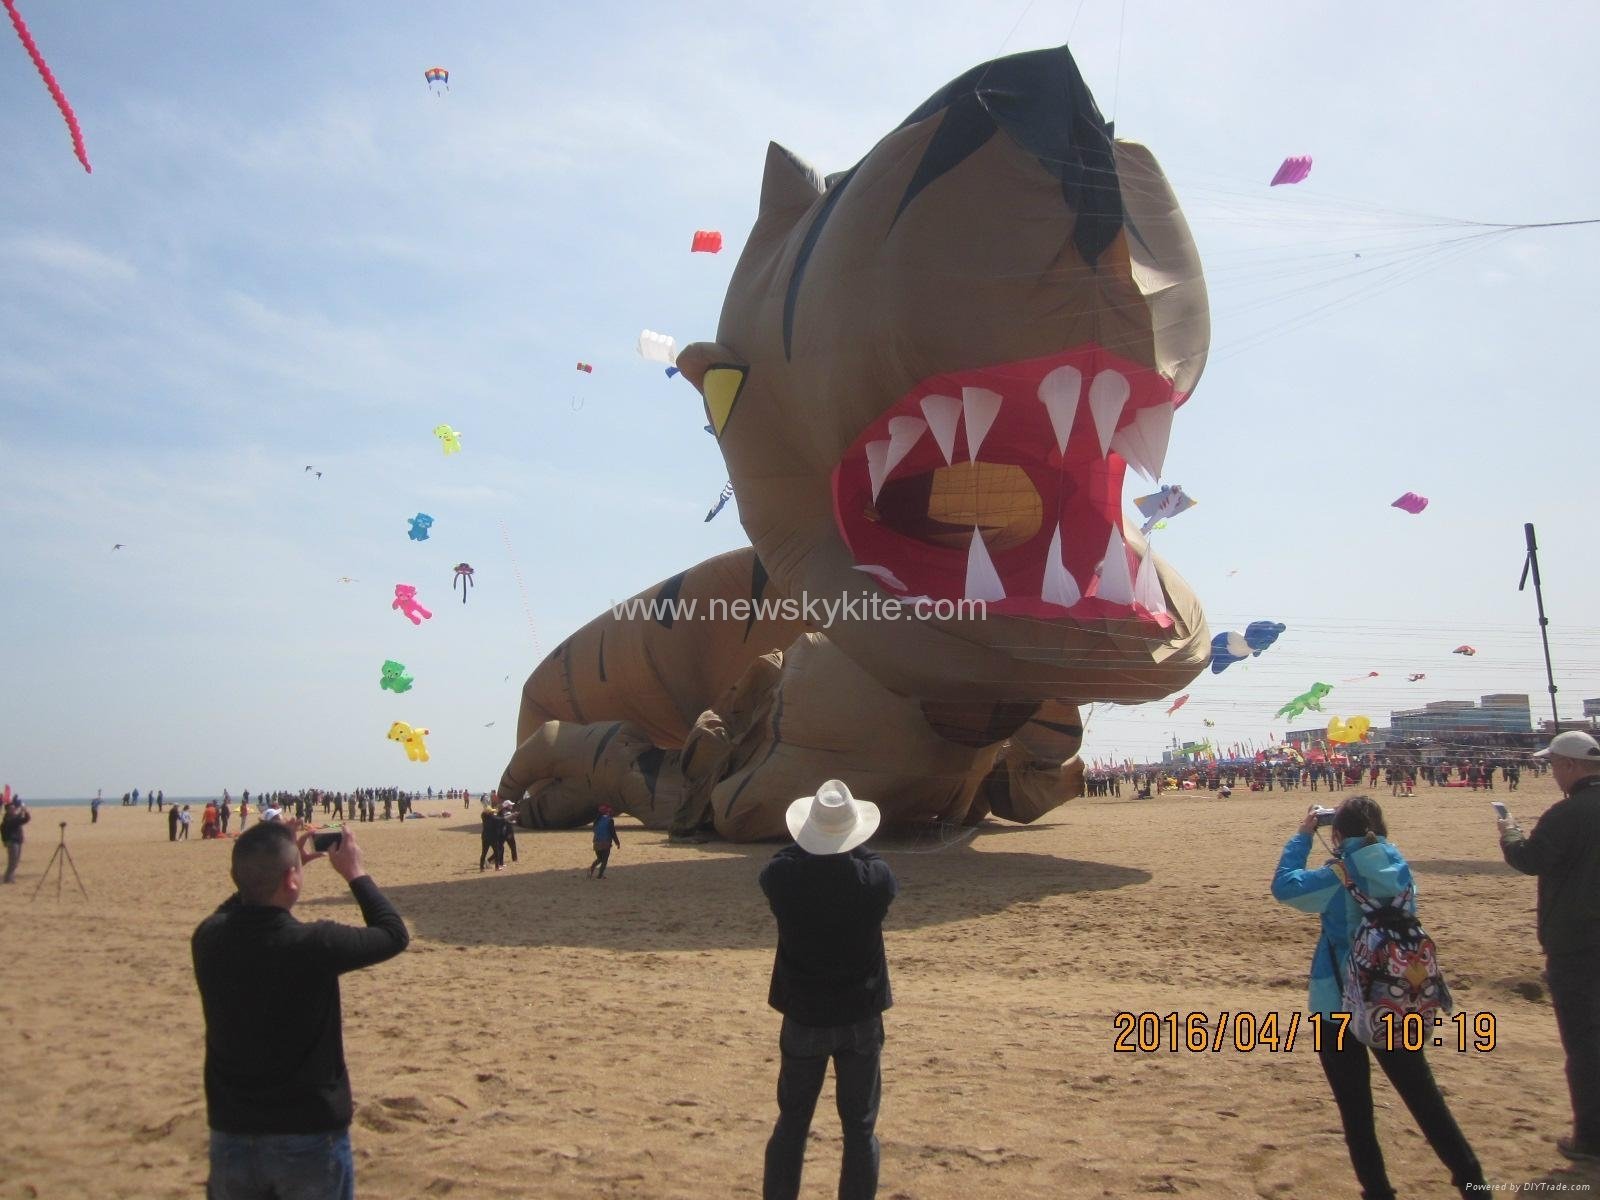 Biggest kite of 2008 WF kite festival (18x12M)